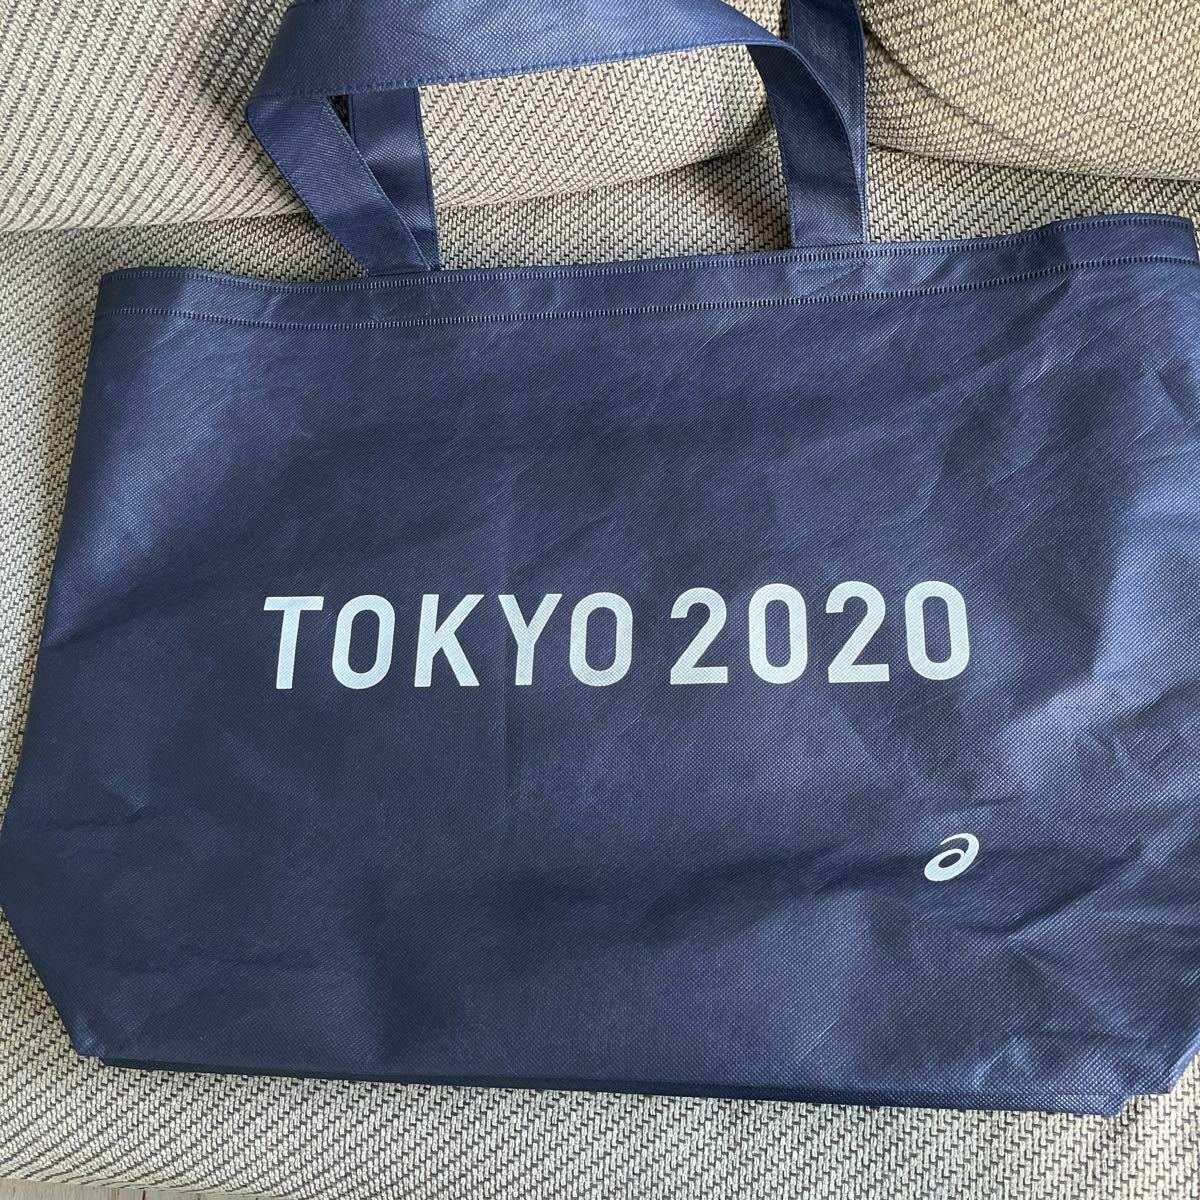 Tokyo 2020 Olympics Large Tote Bag